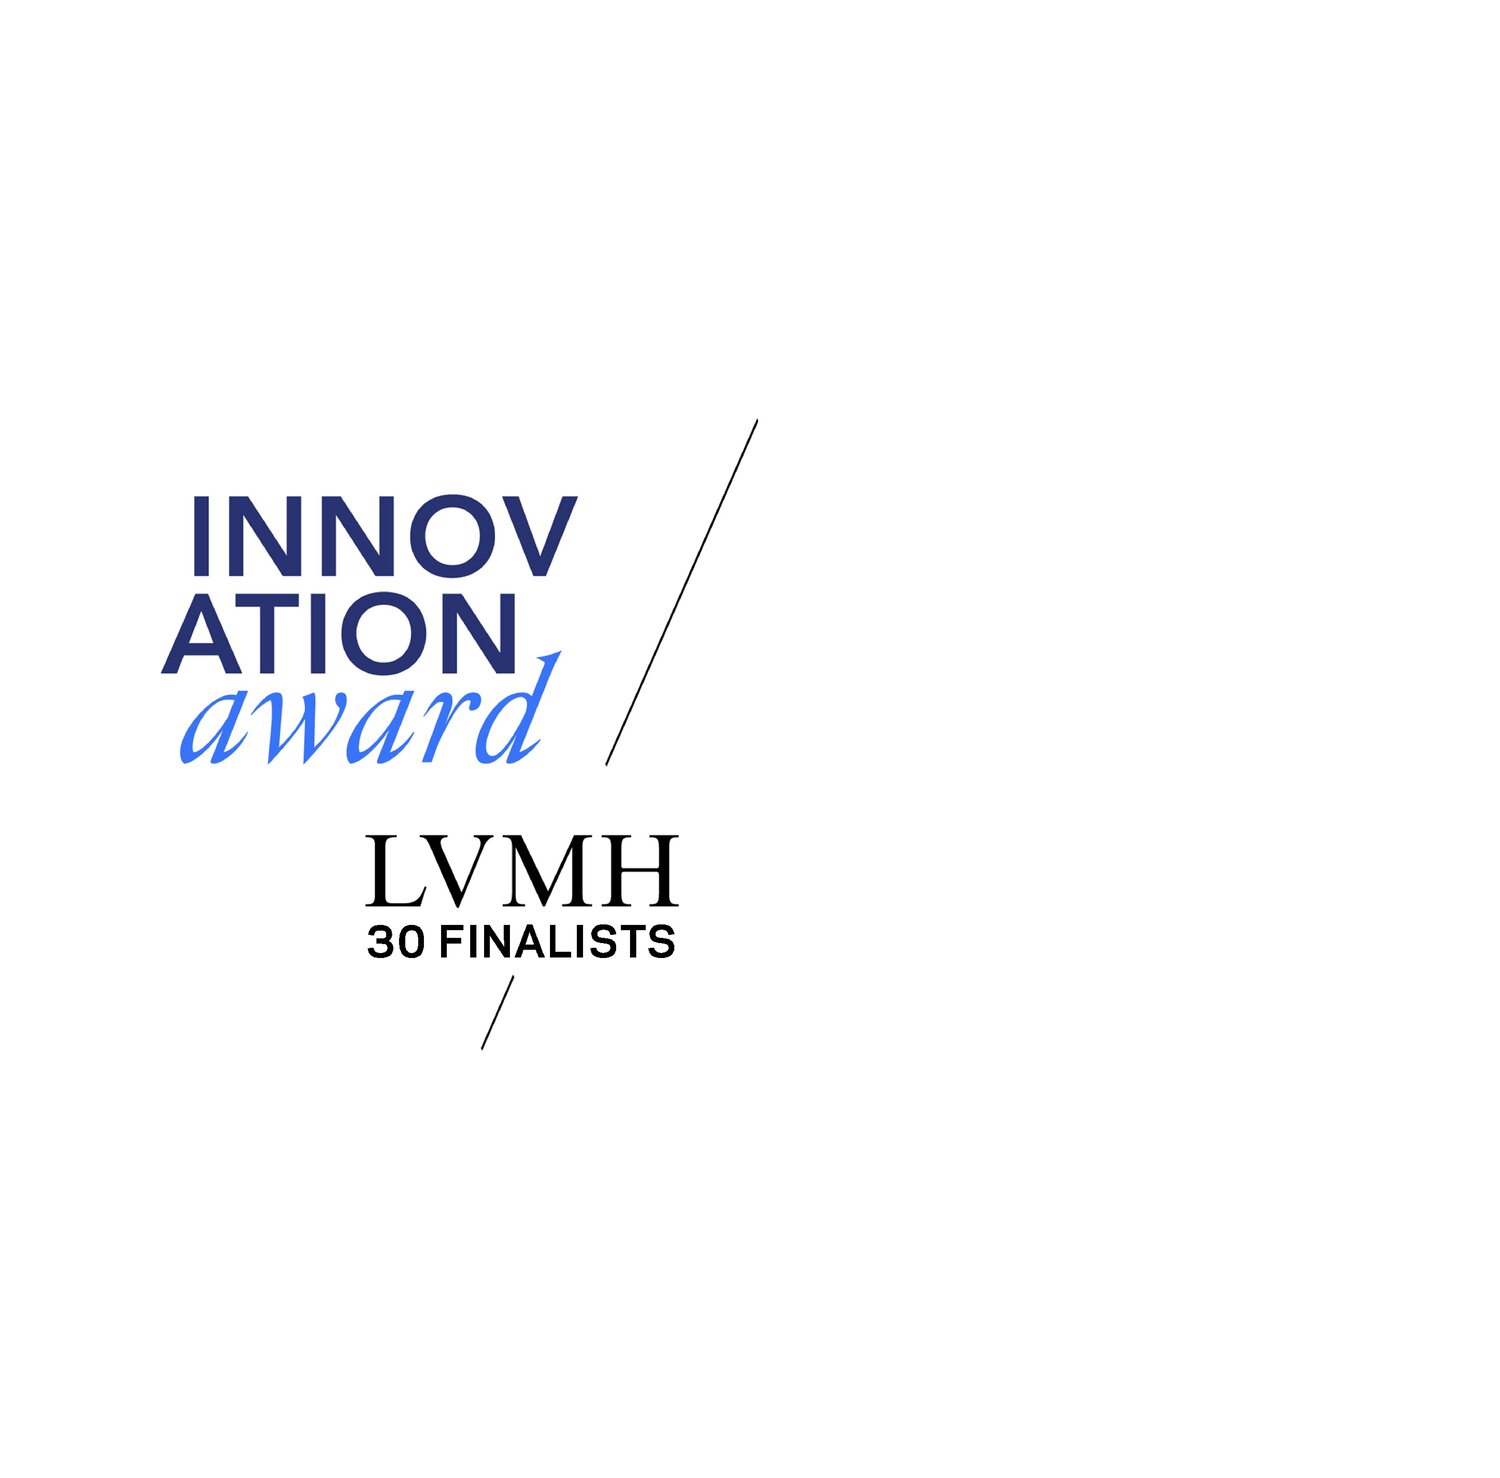 Trade Show and Award - LVMH Innovation Award Finalist at VIVA